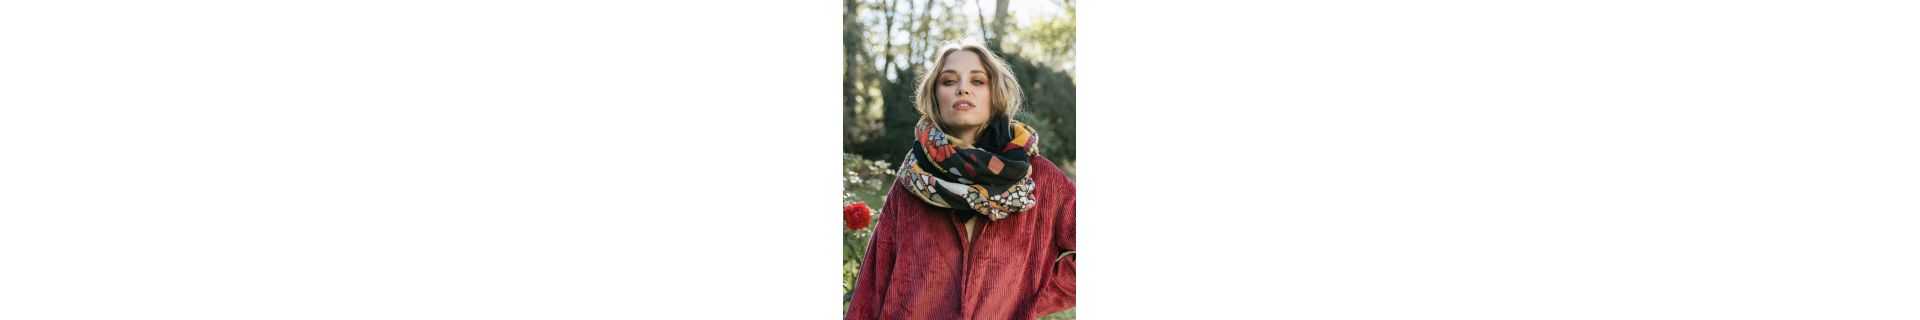 Echarpes & foulards de marque femme : Echarpe, foulard laine, angora, cachemire | Storiatipic